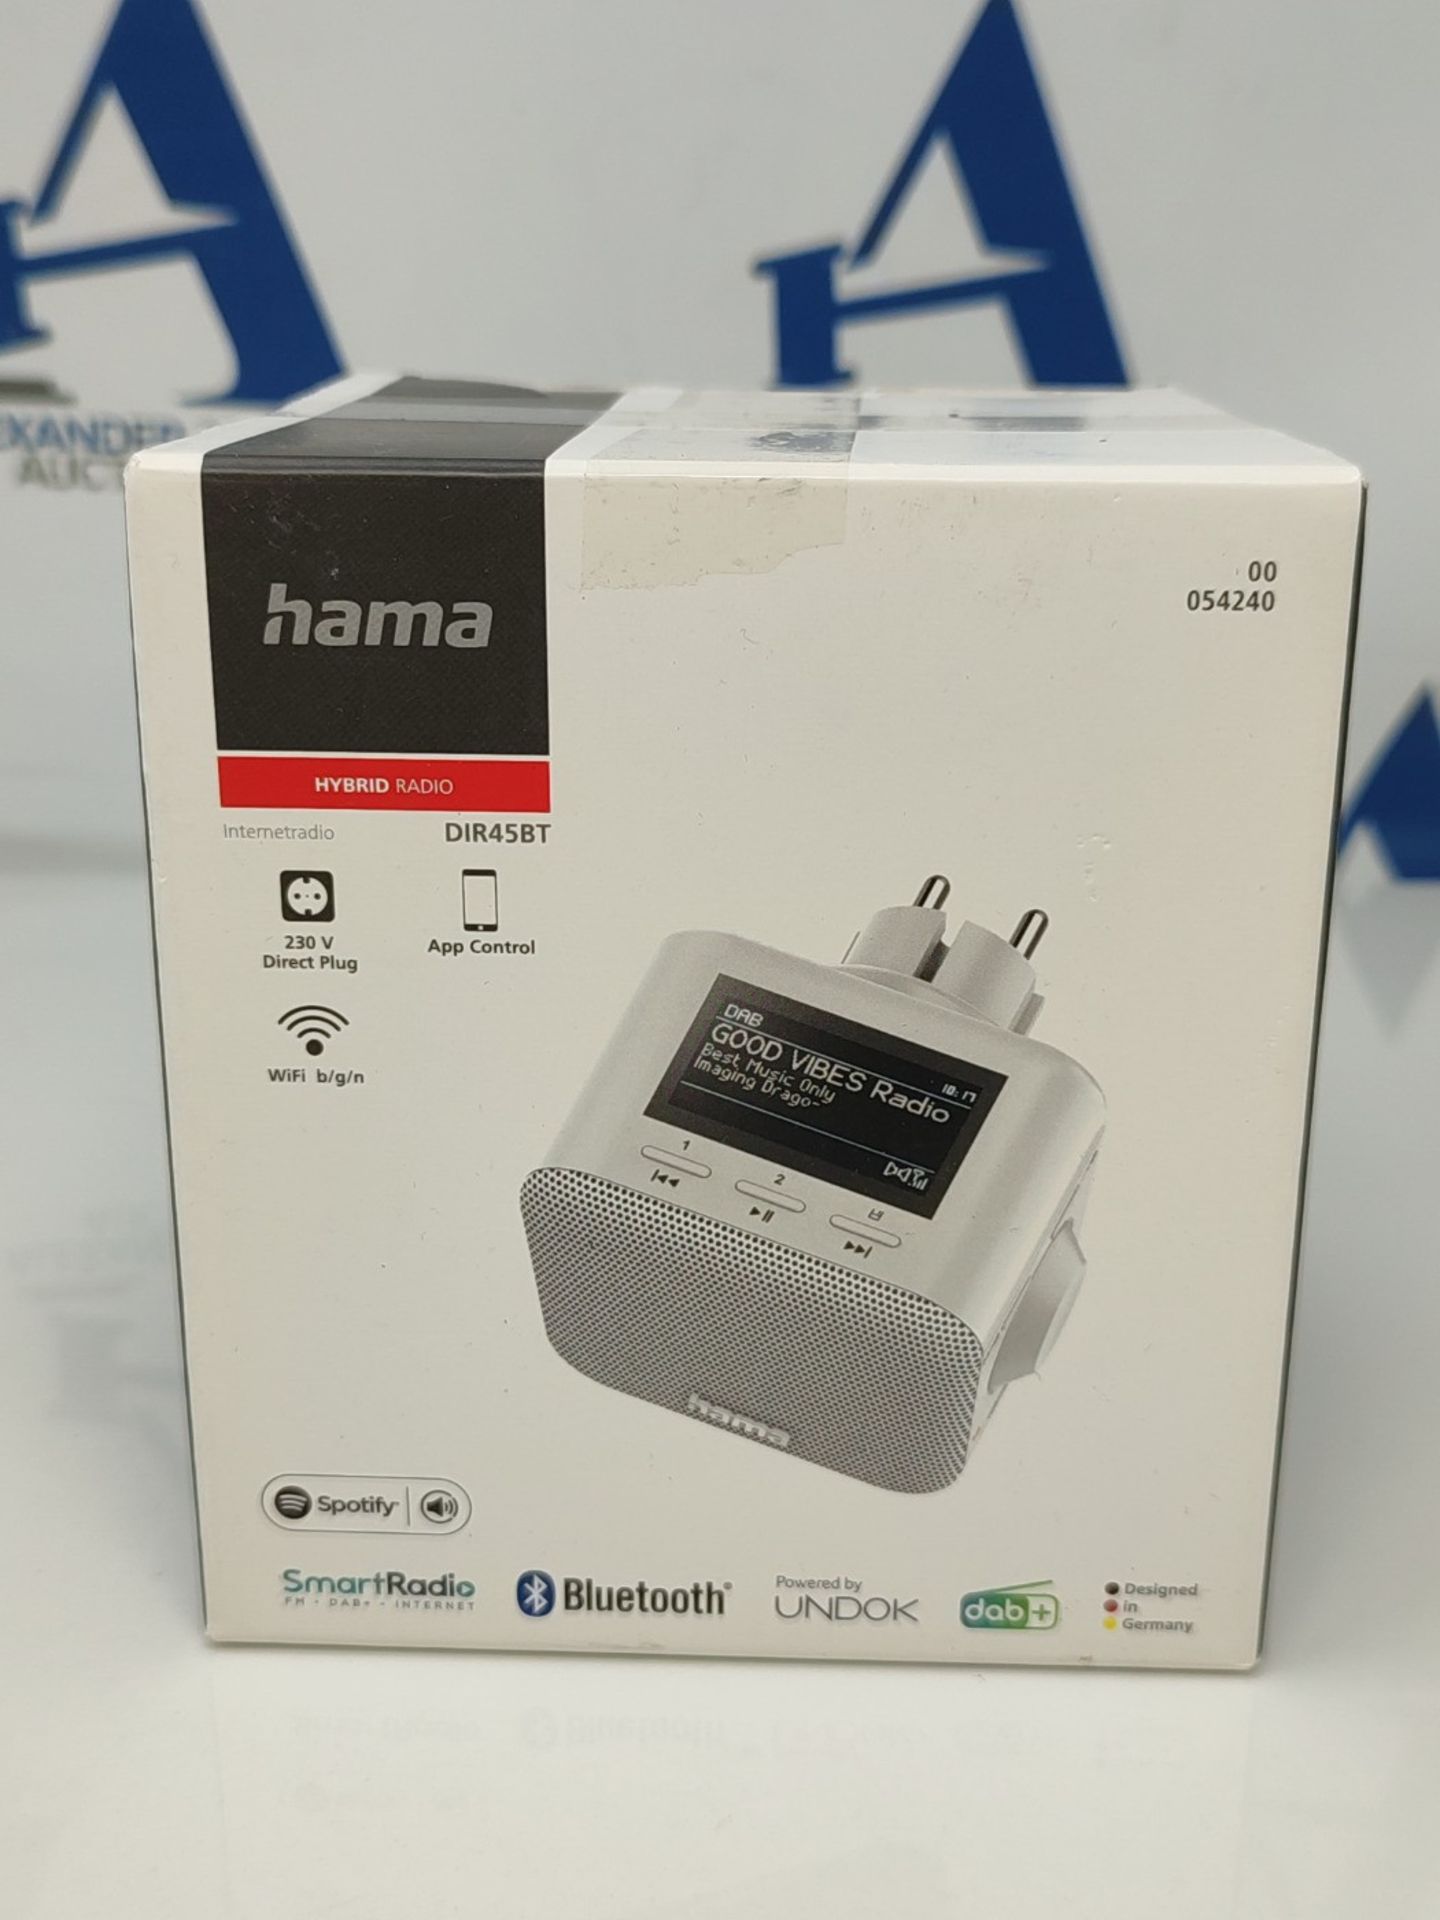 RRP £110.00 Hama Socket Radio DAB Radio DIR45BT Internet Radio DAB+, Bluetooth & Spotify (WiFi kit - Image 5 of 6